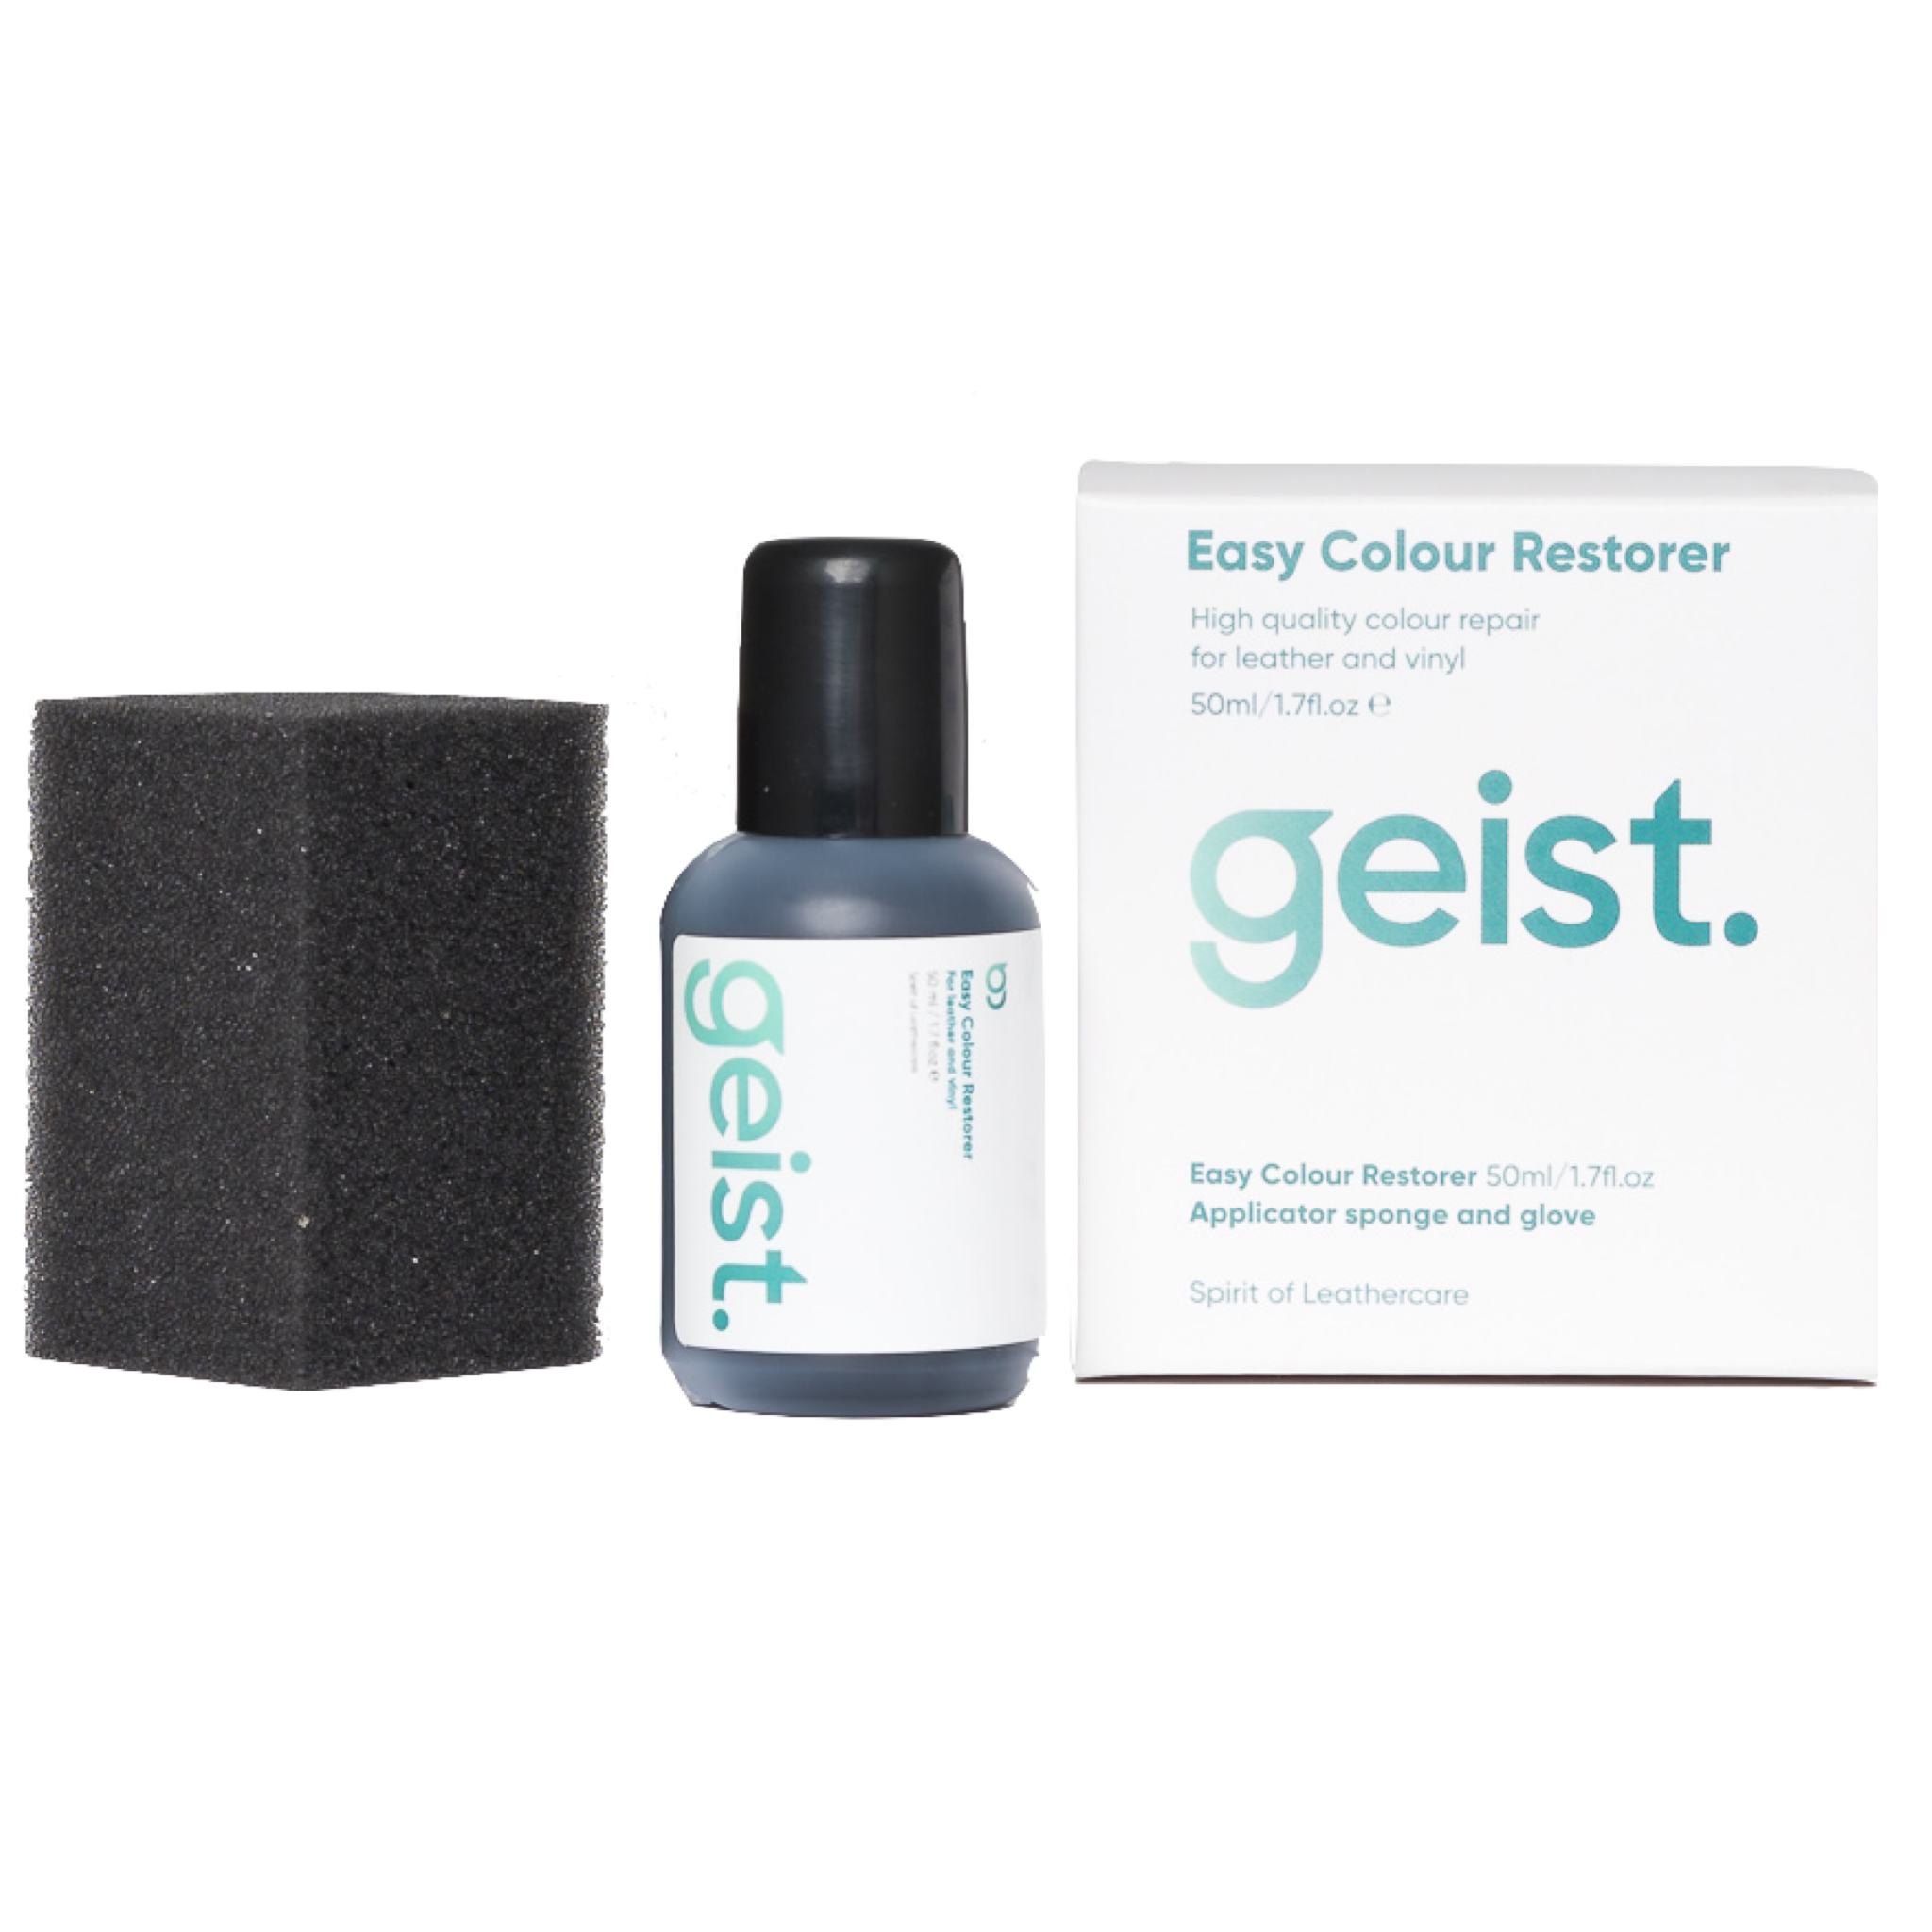 Geist. Easy Colour Restorer DIY Leather & Vinyl paint